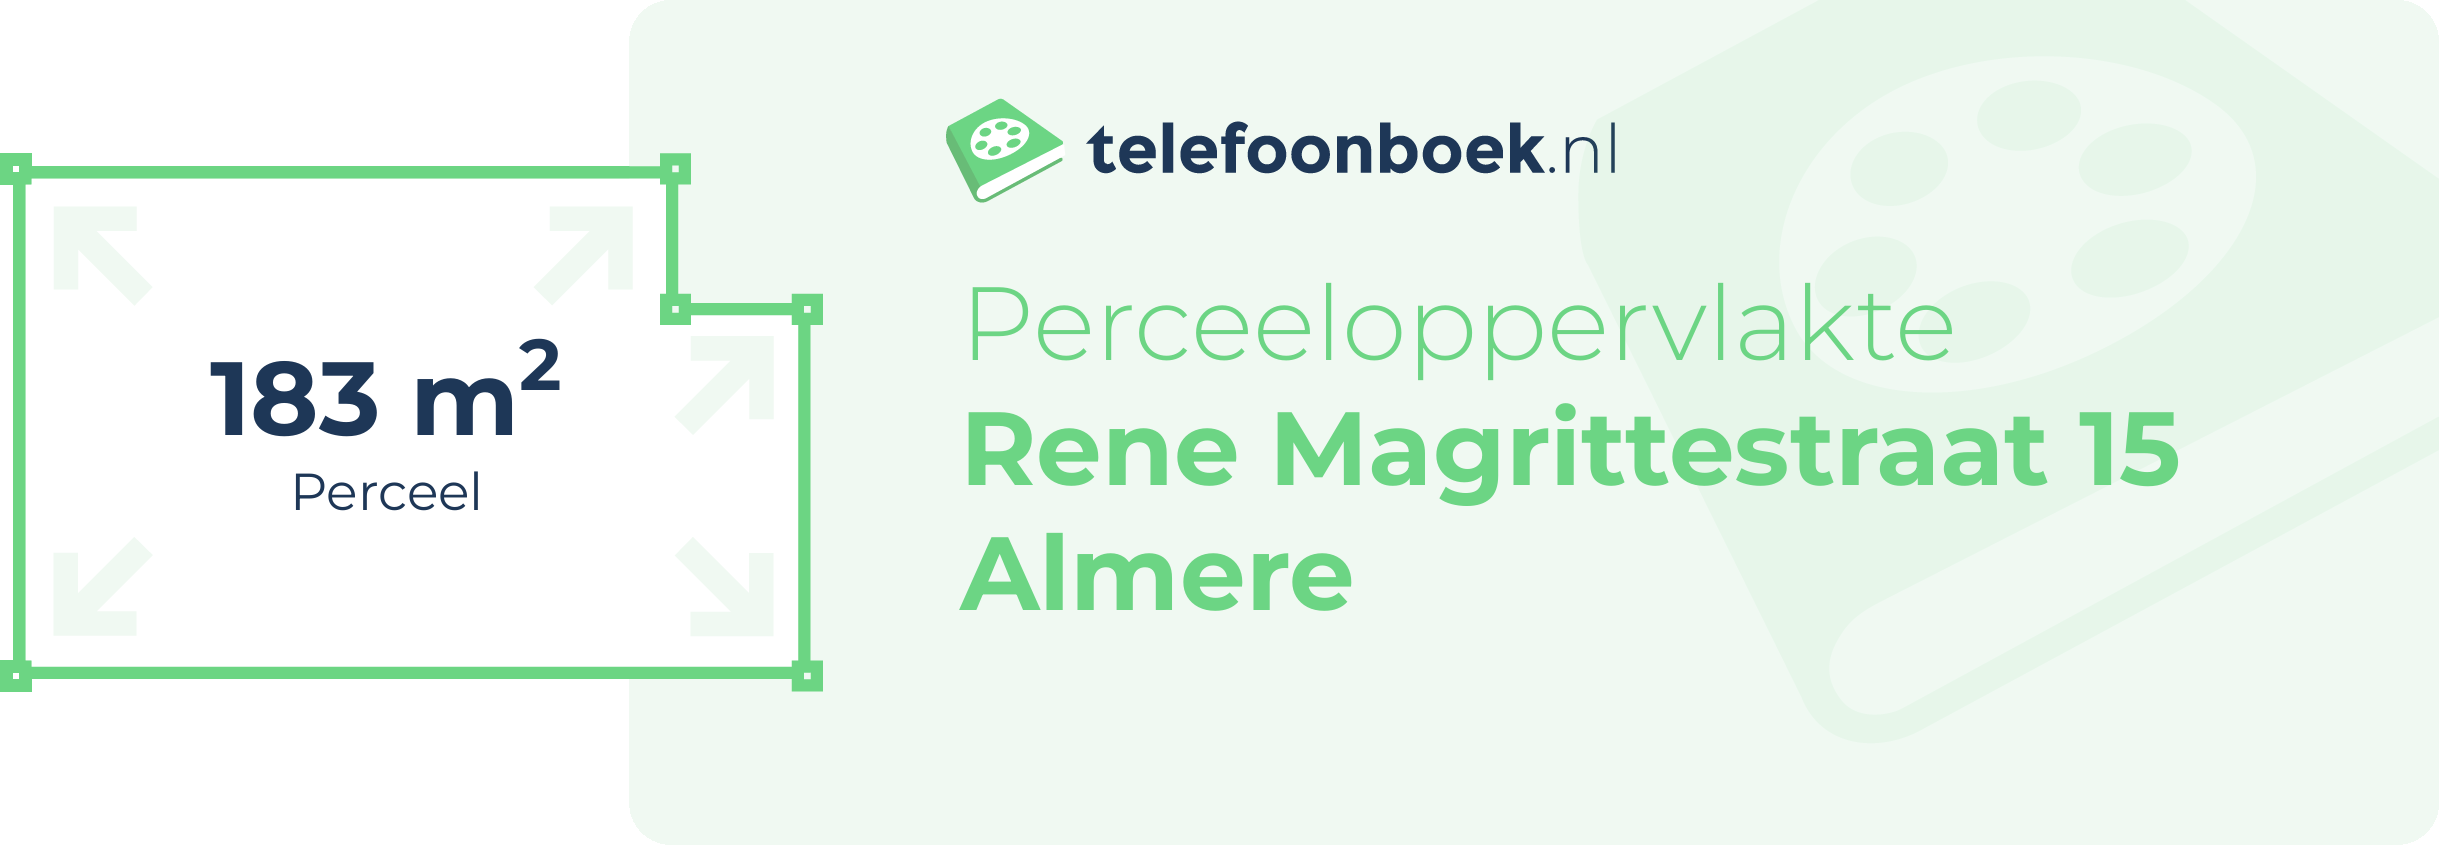 Perceeloppervlakte Rene Magrittestraat 15 Almere